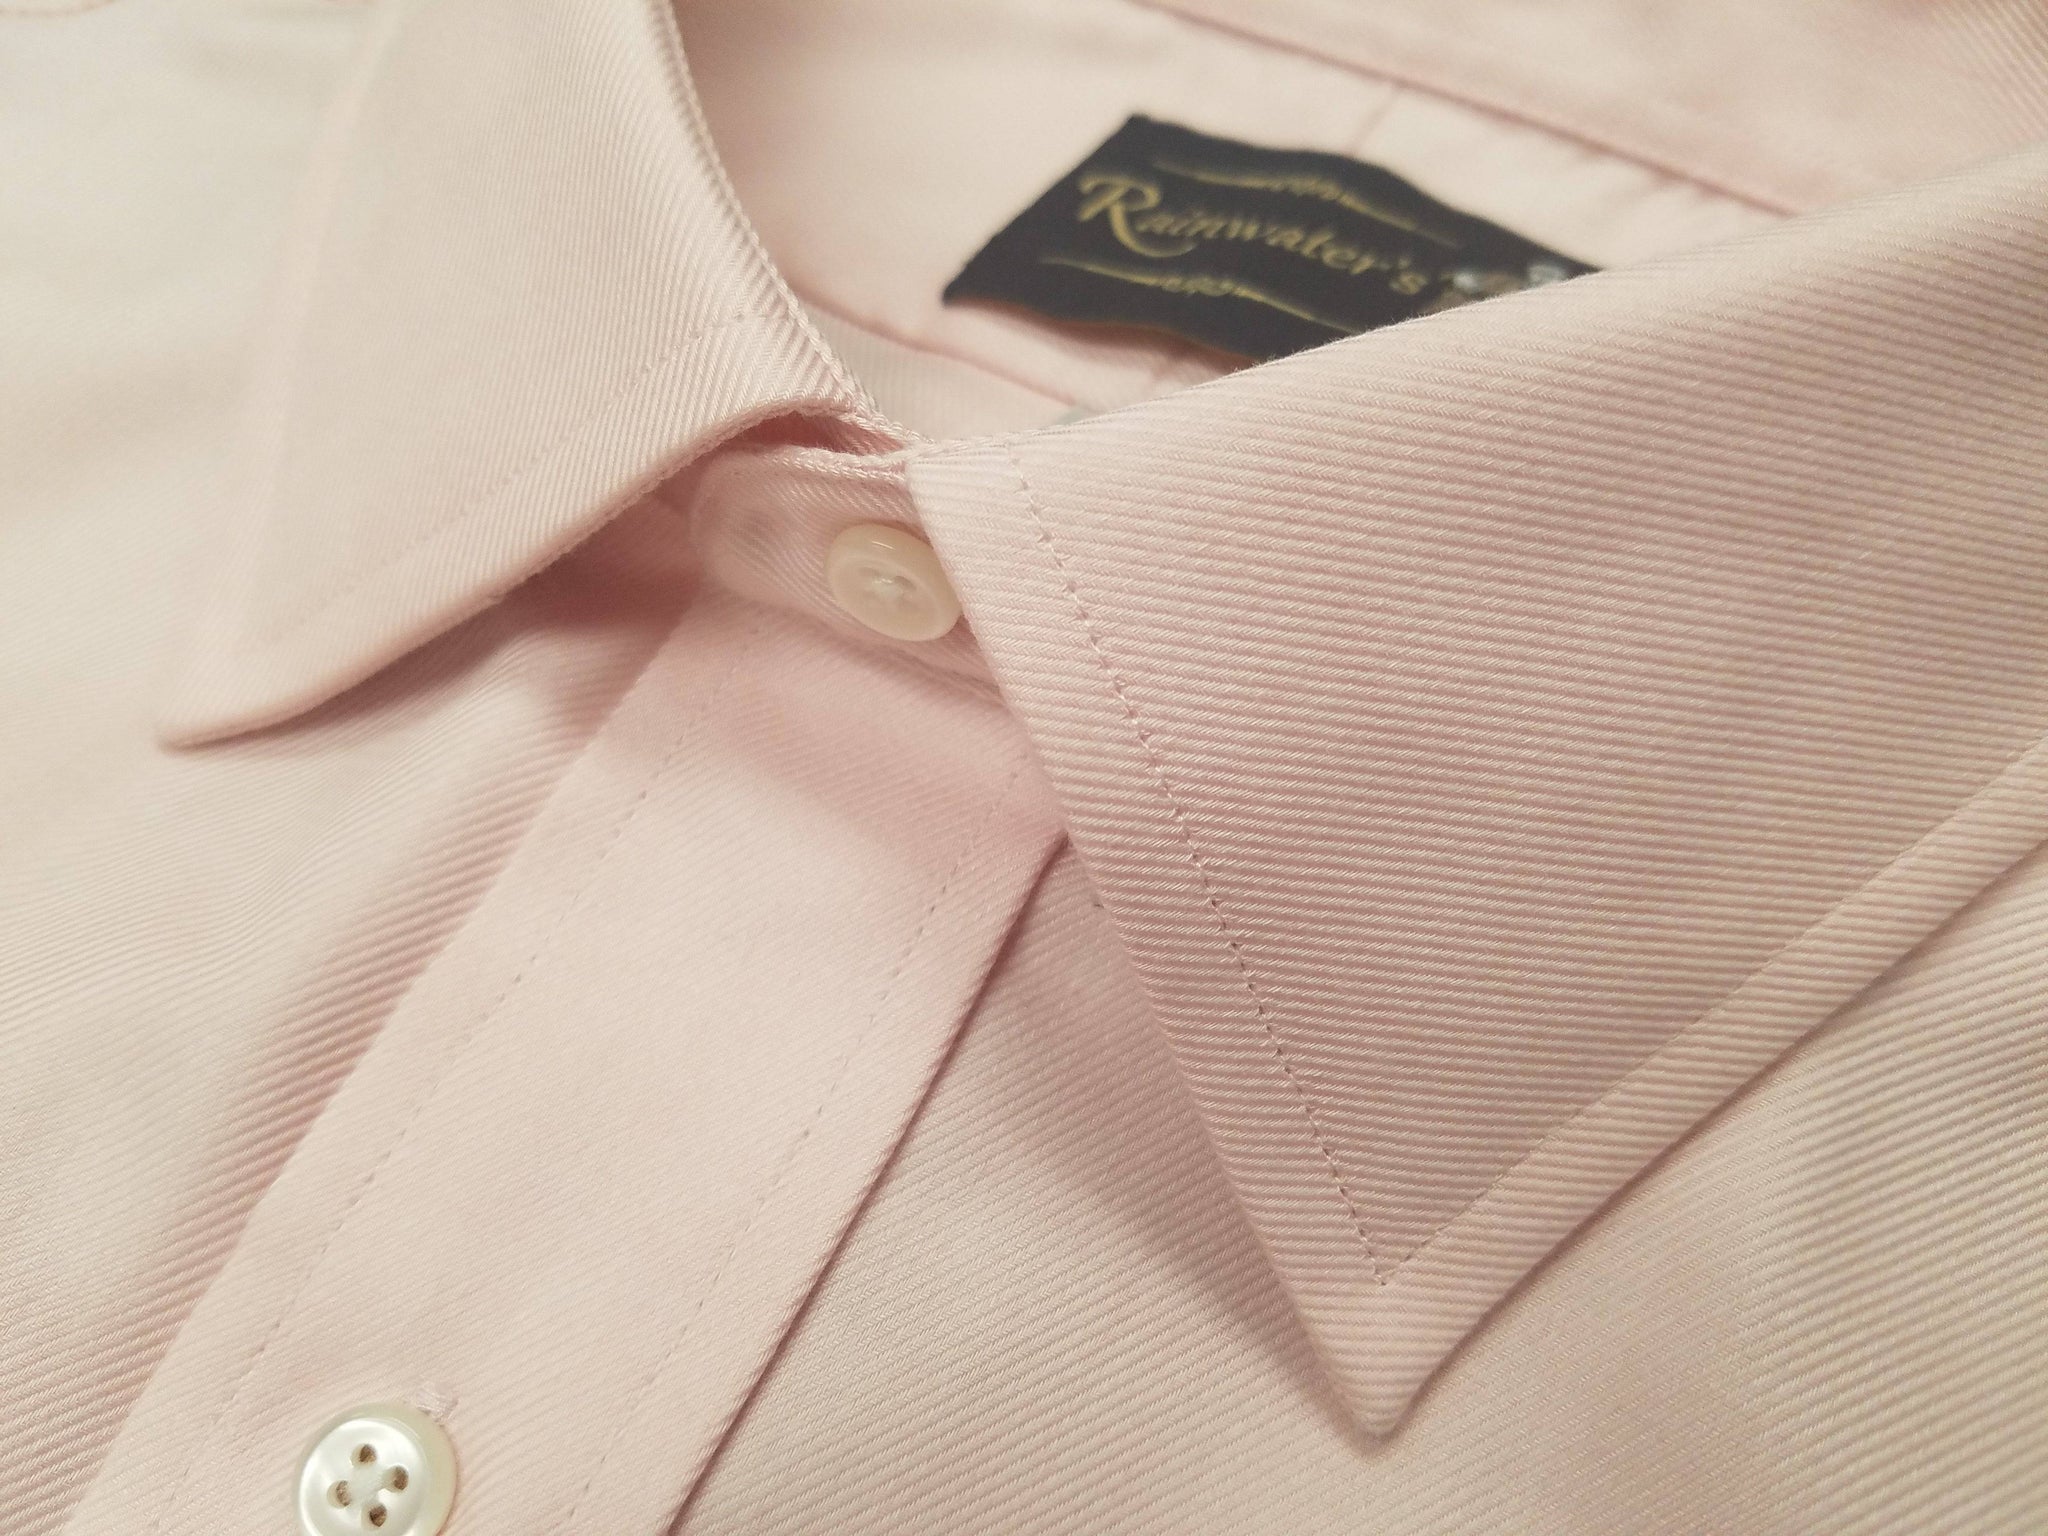 Rainwater's Non-Iron 100% Cotton Twill Dress Shirt in Pink - Rainwater's Men's Clothing and Tuxedo Rental